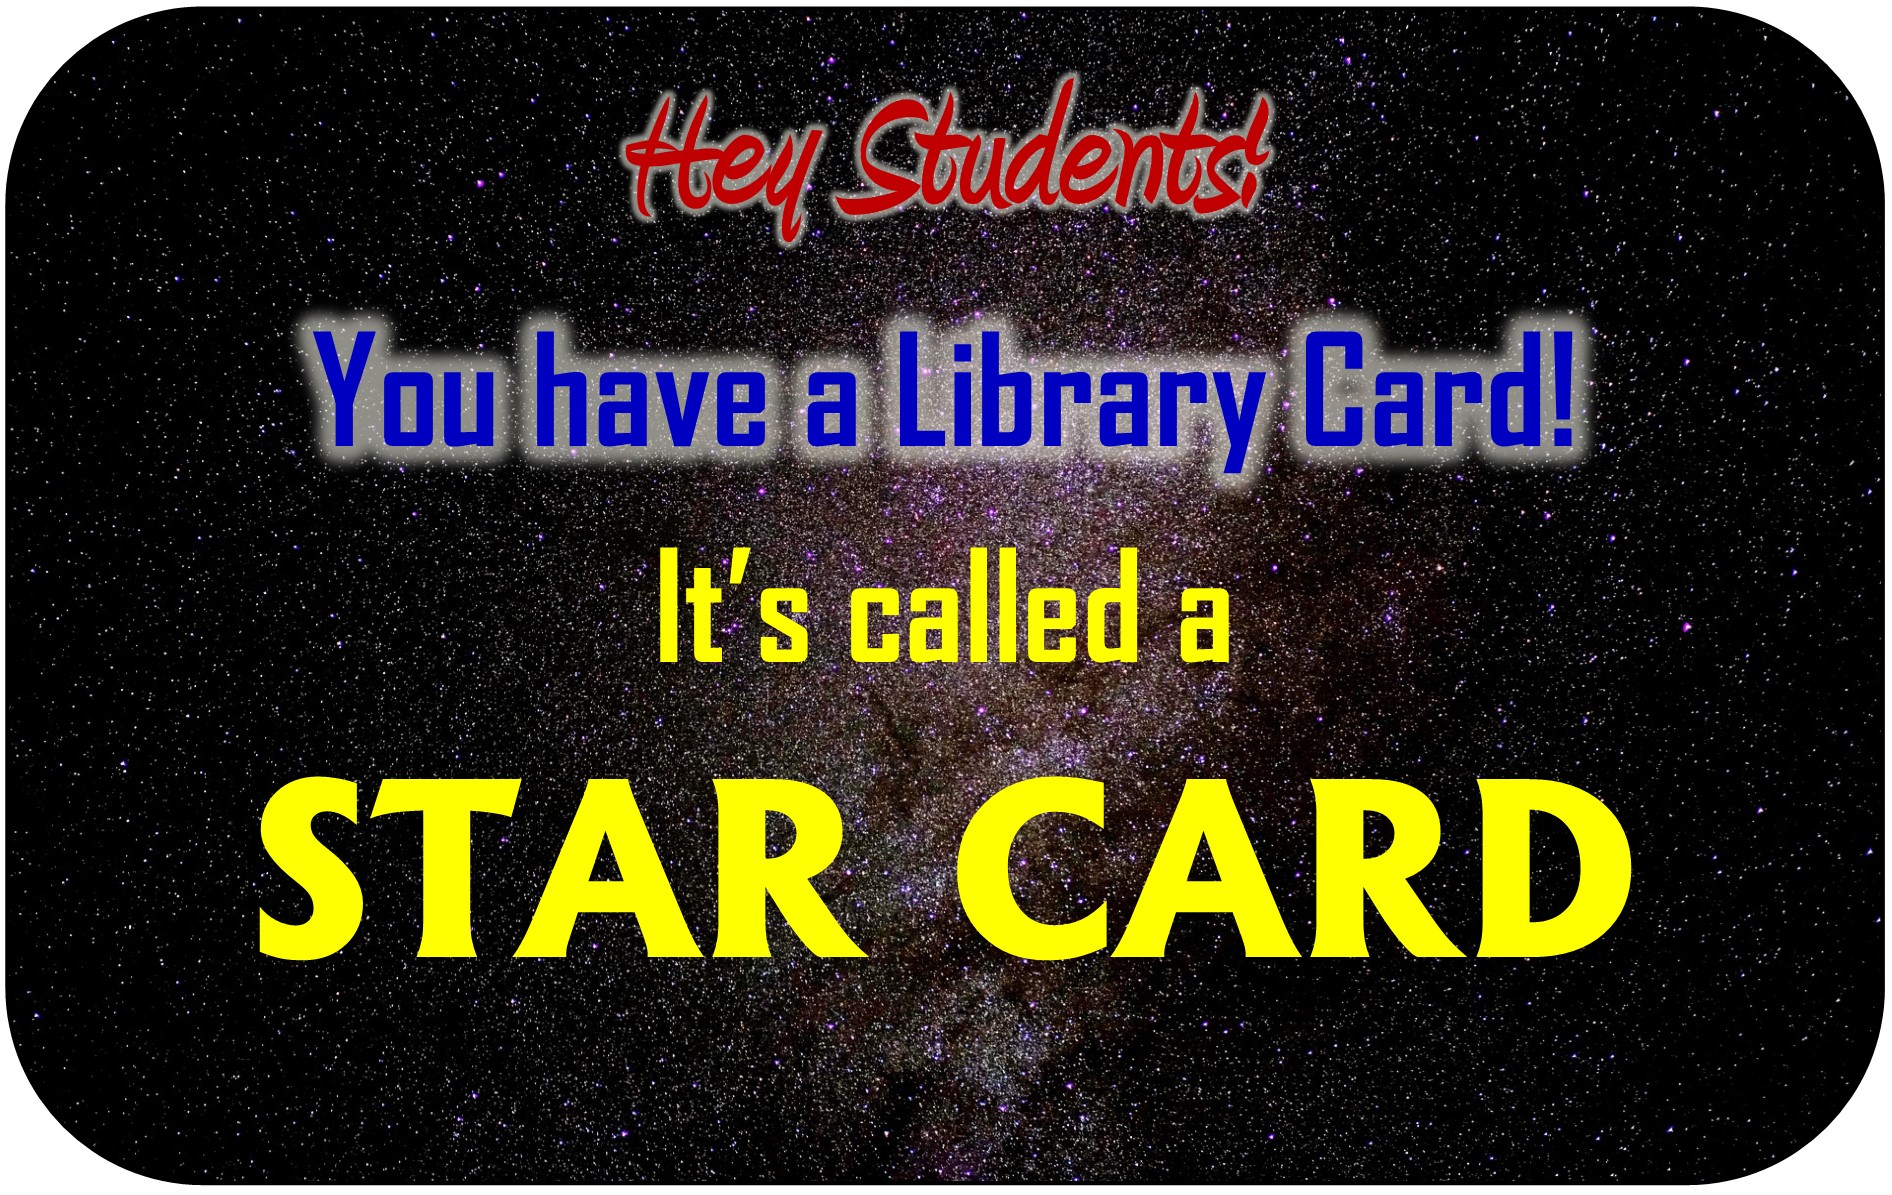 ACLS STAR Card